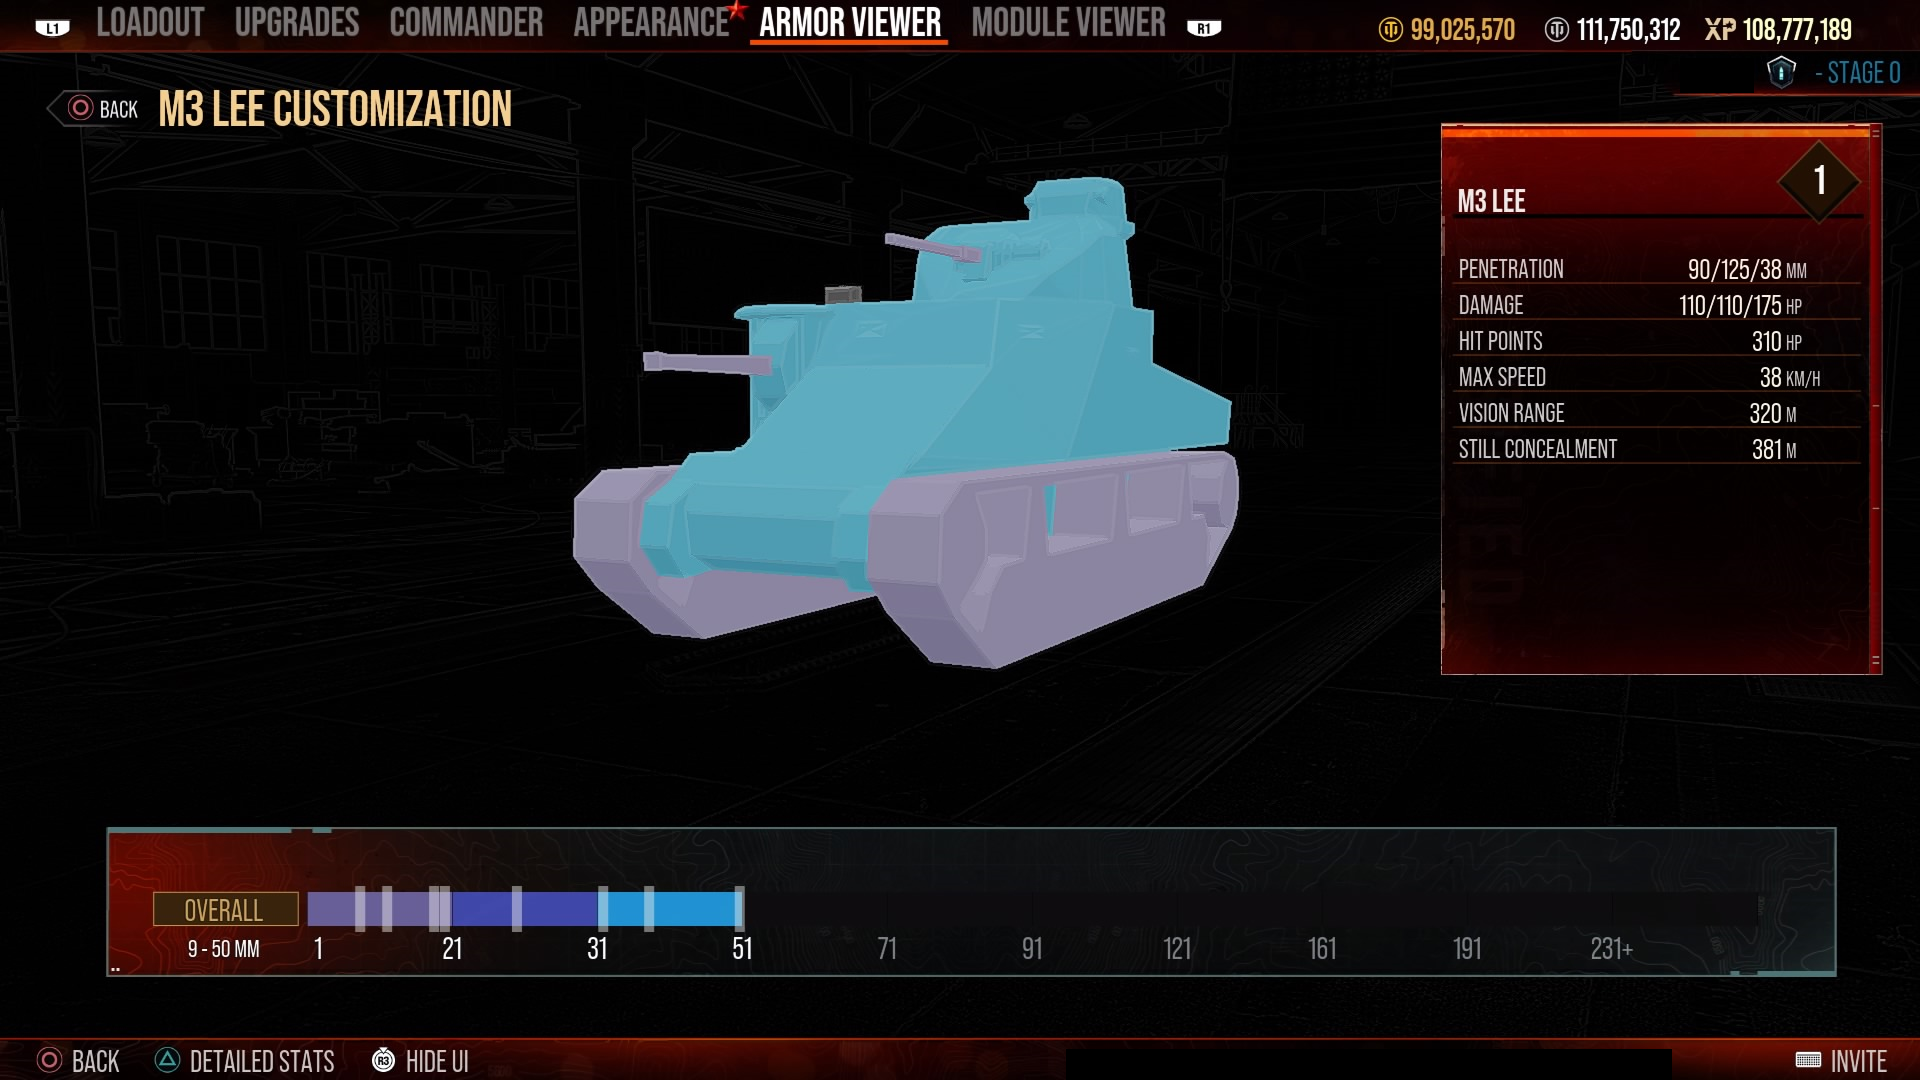 Tank Customization - Armor Viewer